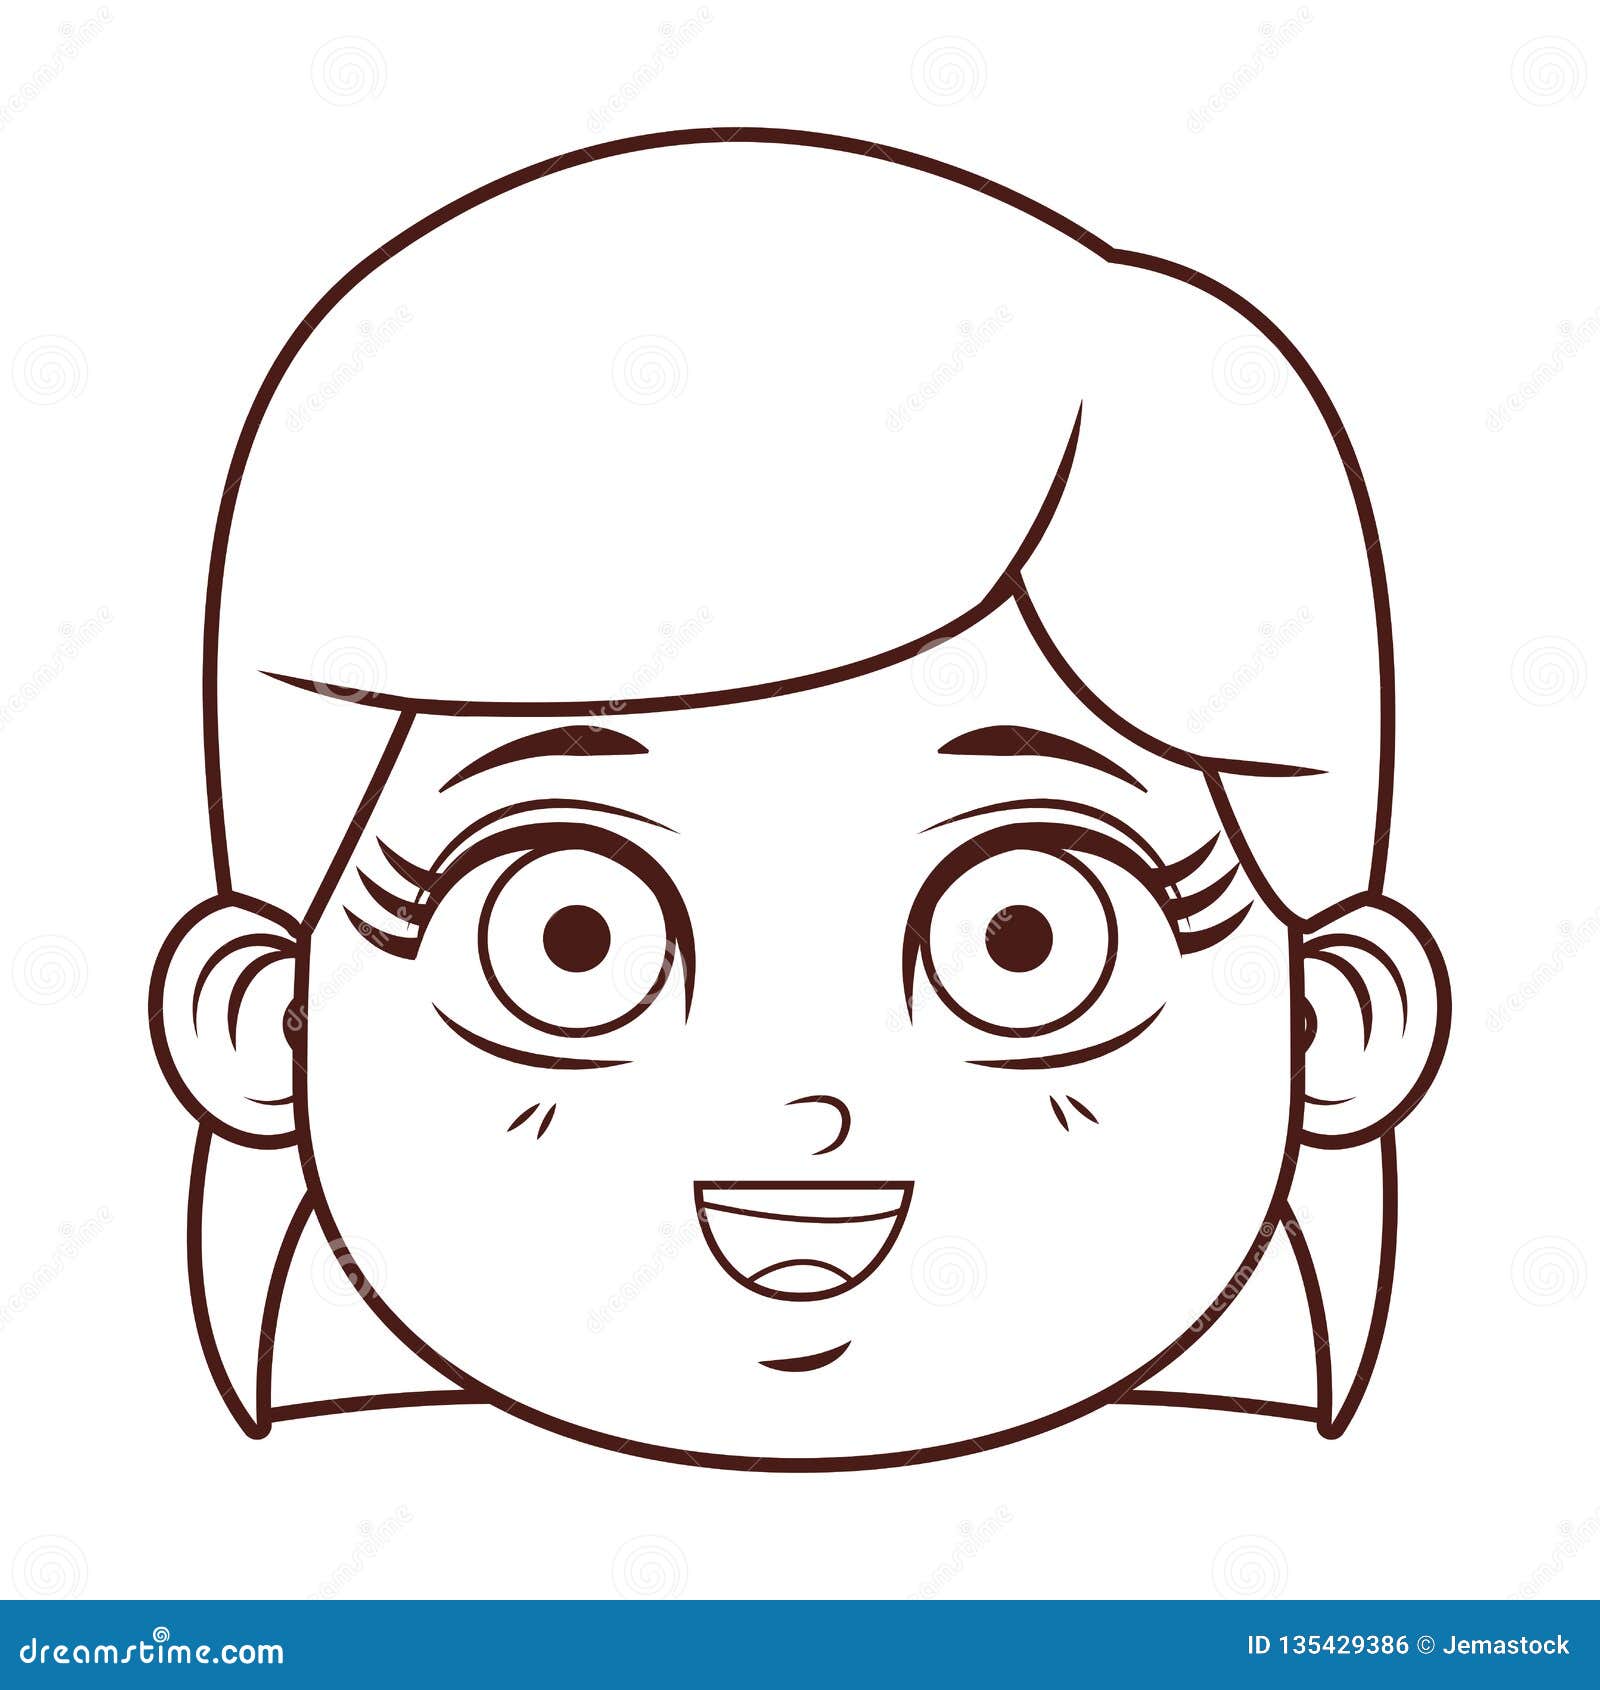 Cute girl face cartoon stock vector. Illustration of model - 135429386